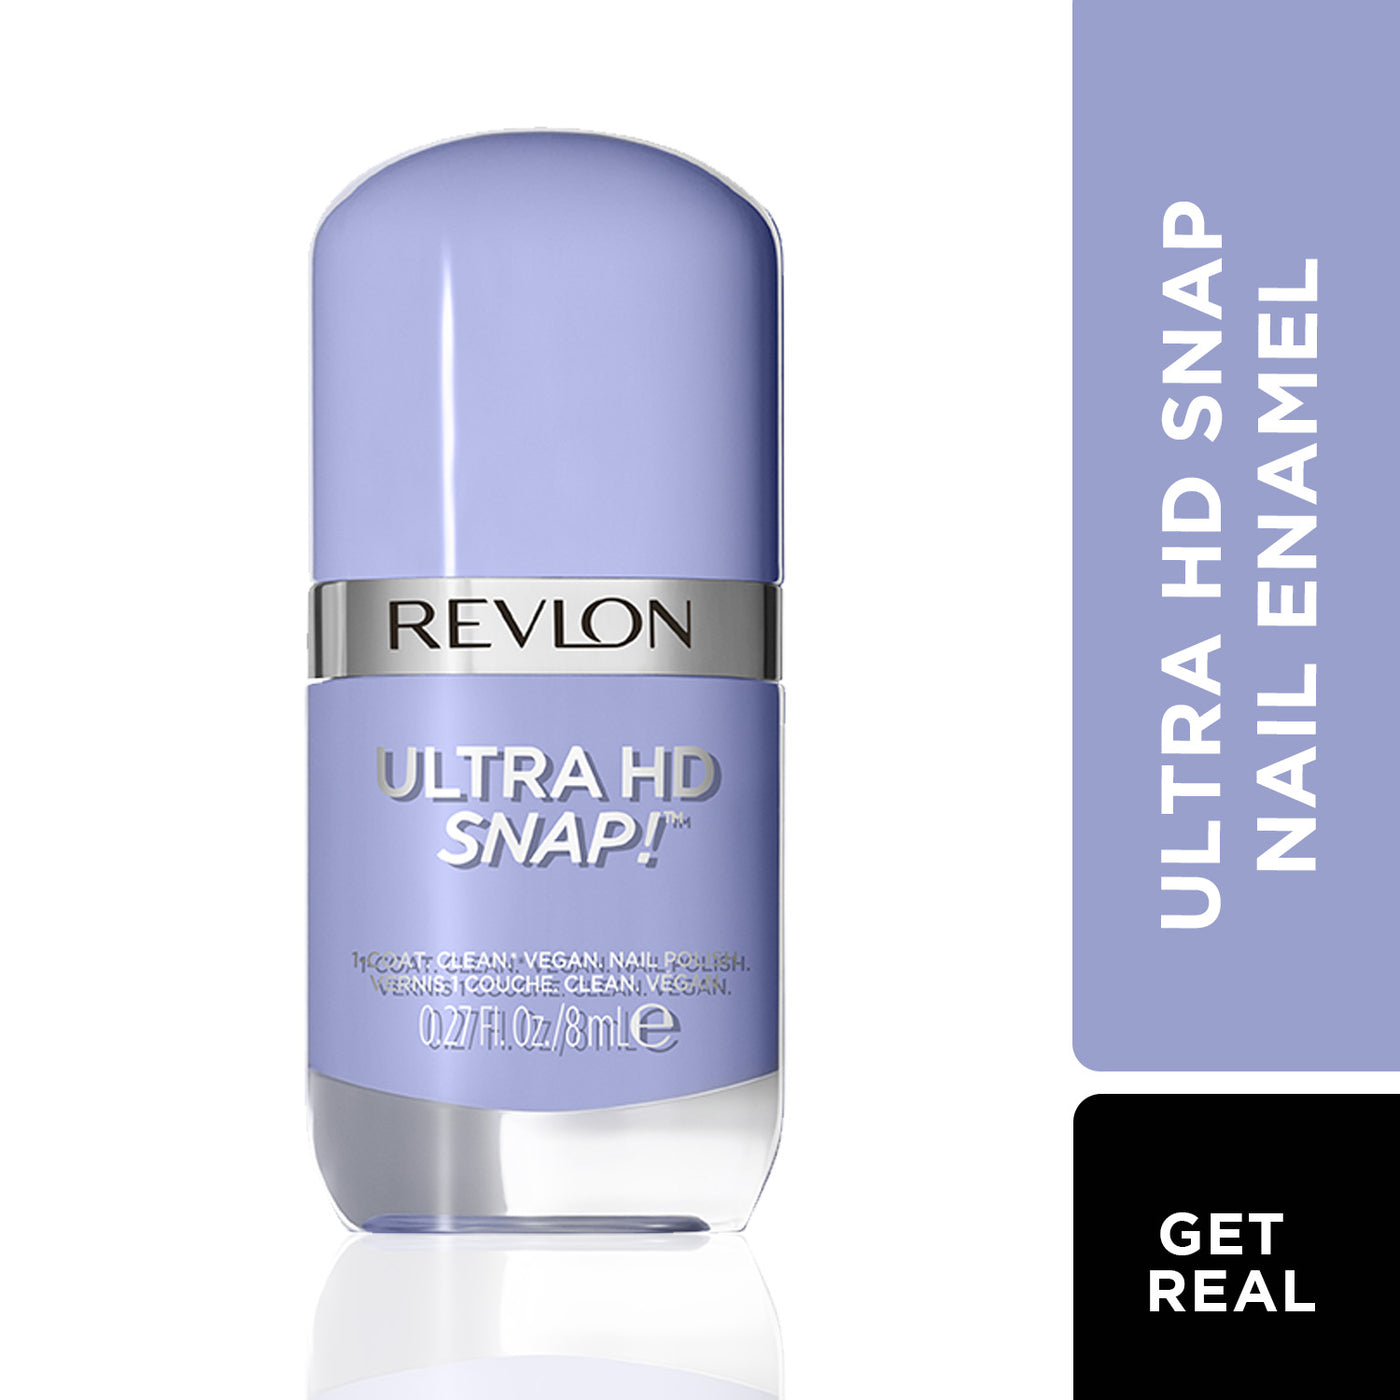 Revlon Ultra HD Snap Nail Polish